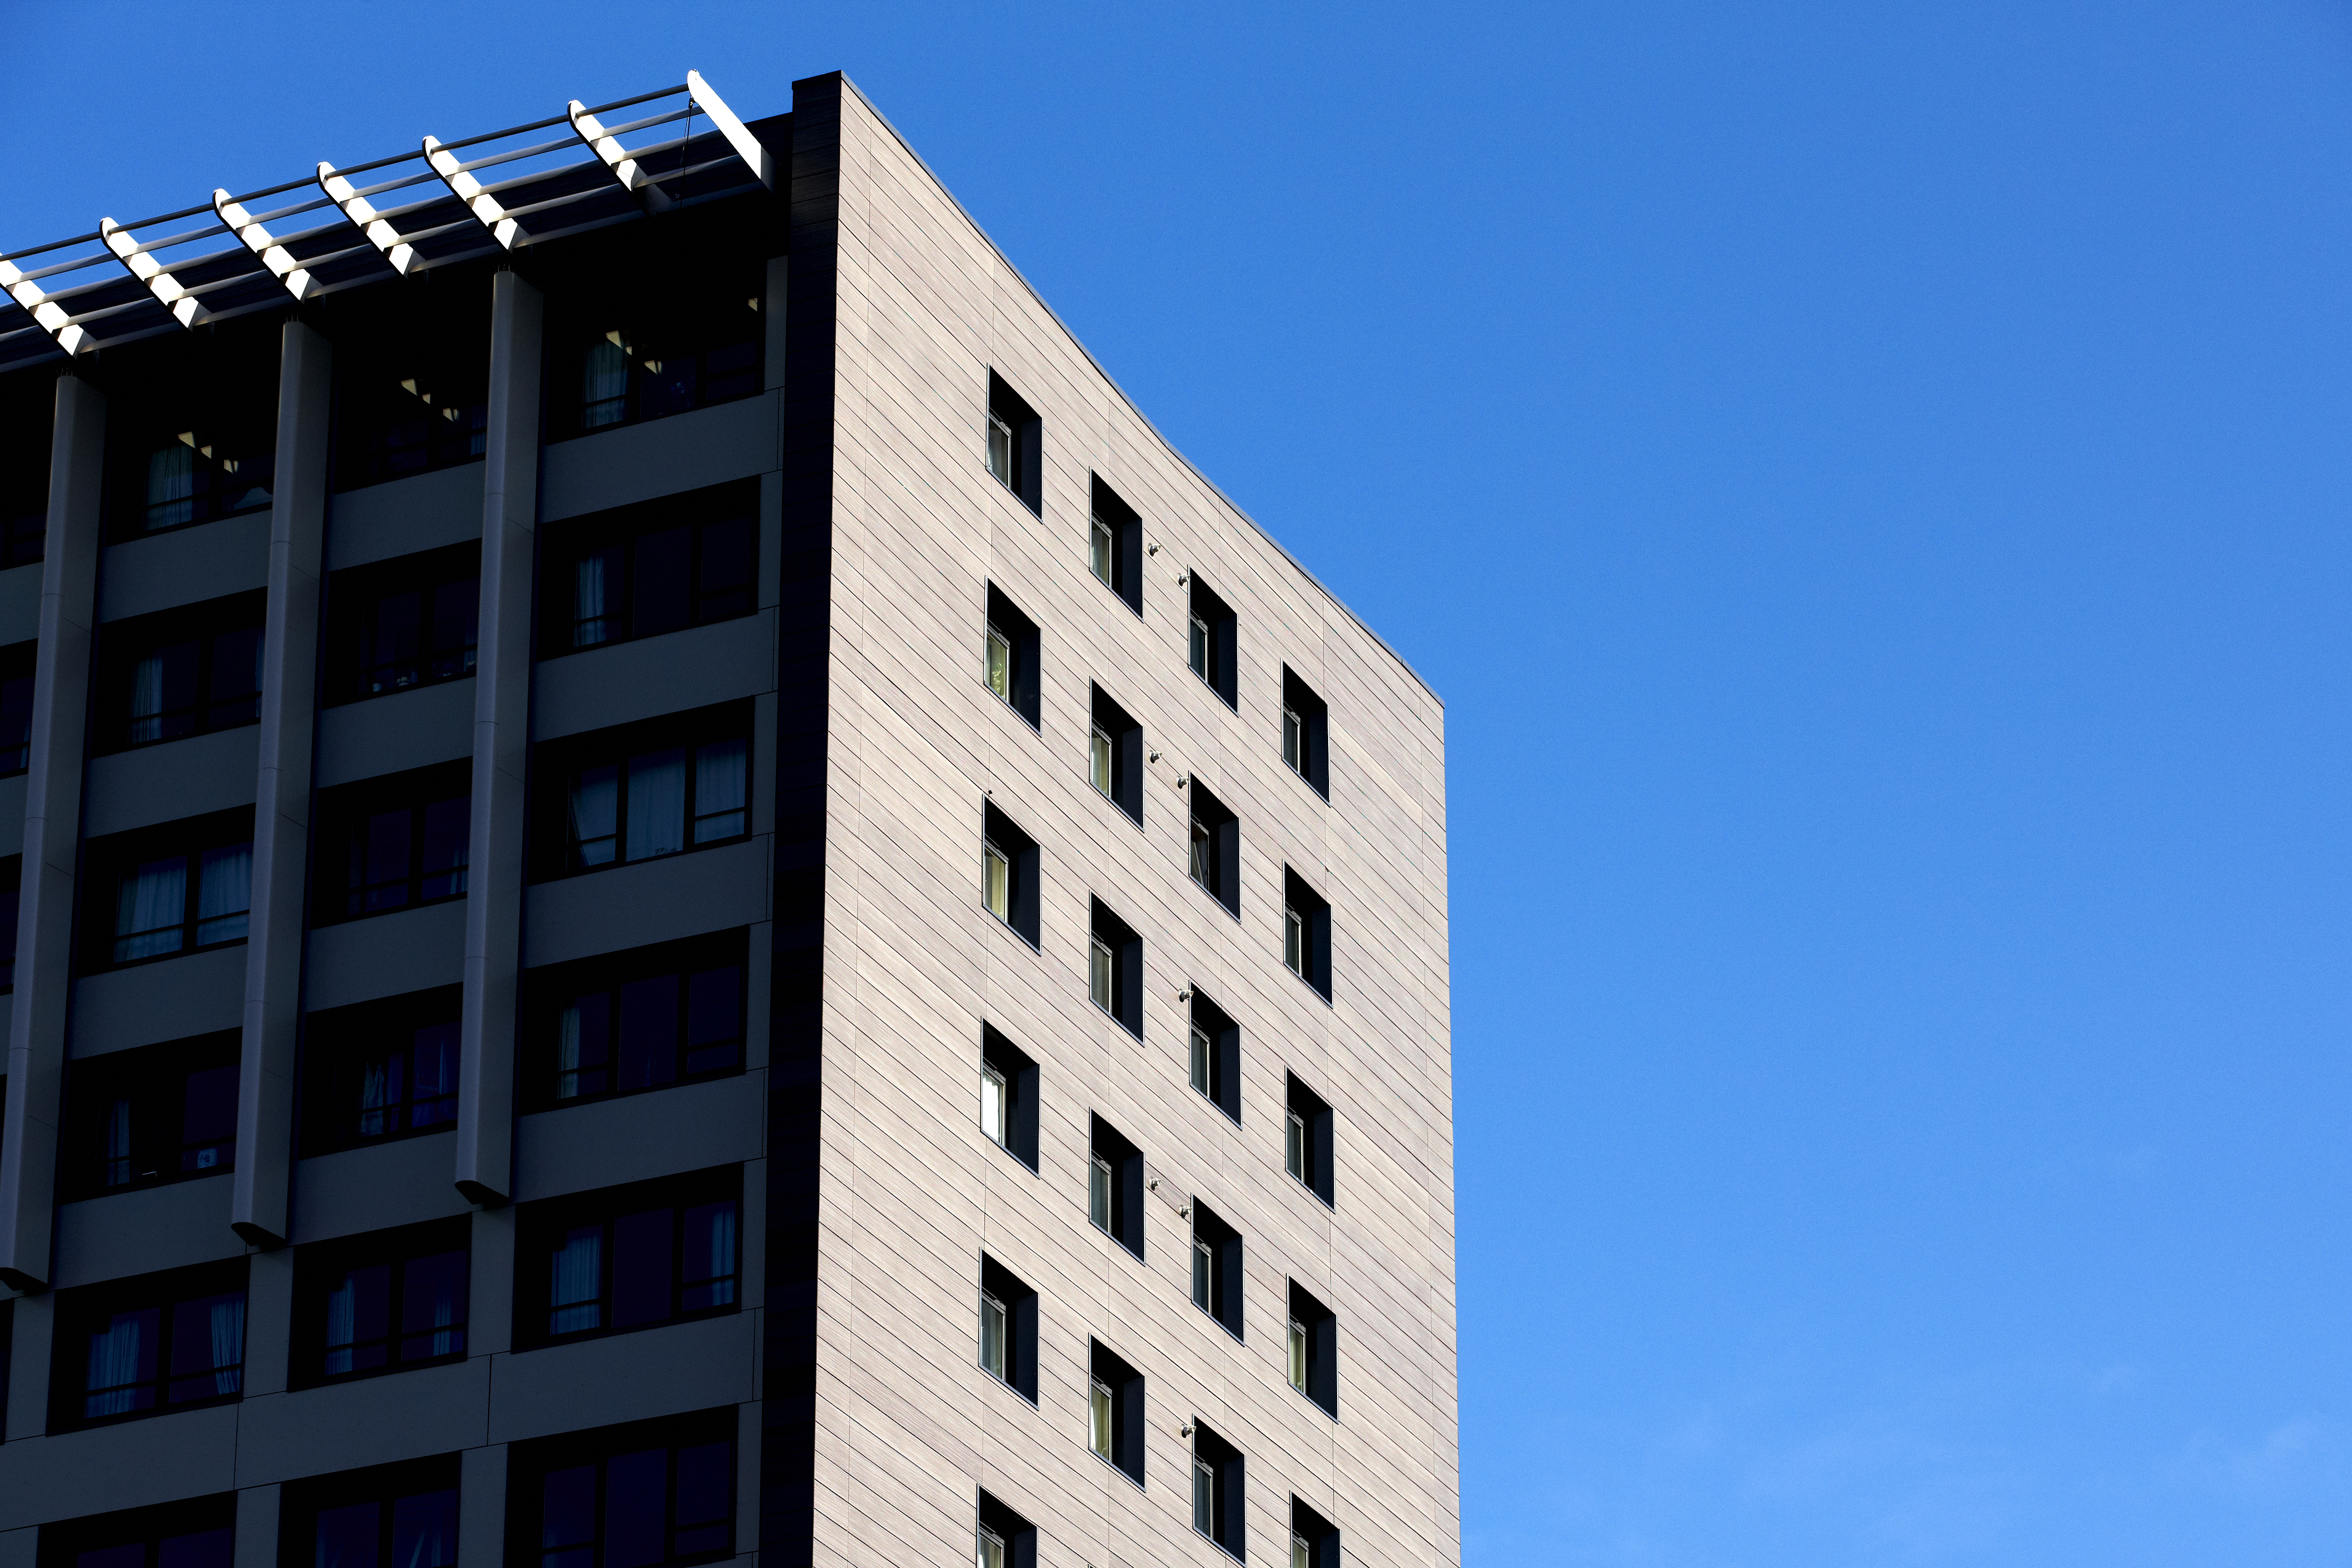 A high-rise building against a blue sky